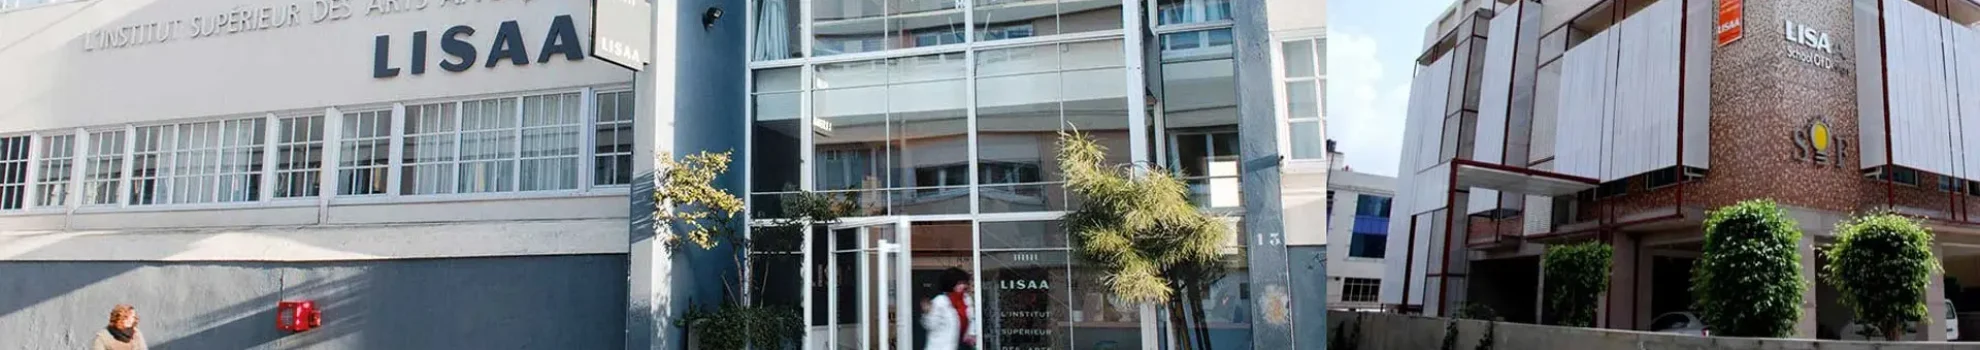 LISAA School of Arts and Design